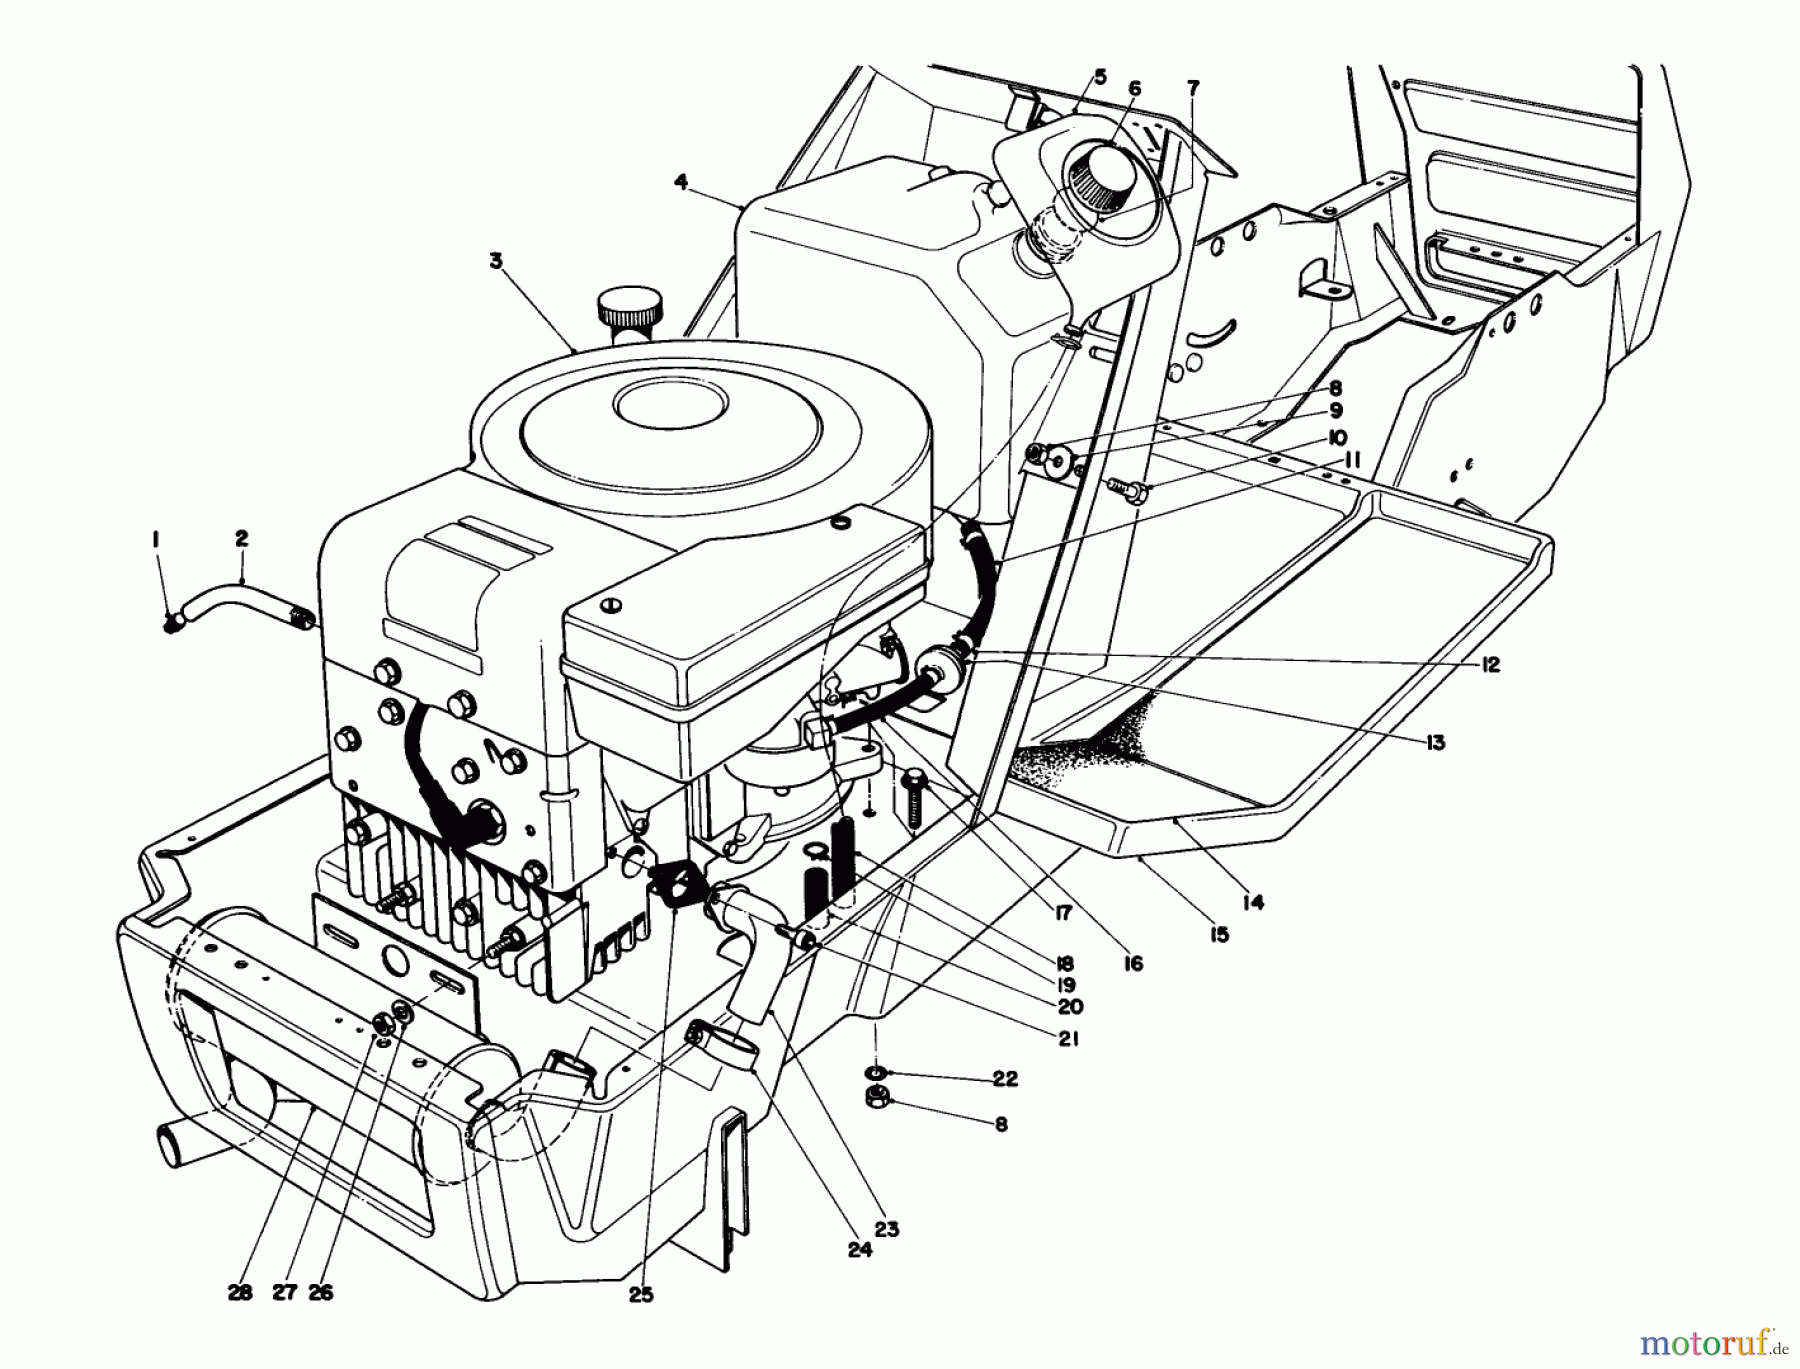  Toro Neu Mowers, Lawn & Garden Tractor Seite 1 57300 (8-32) - Toro 8-32 Front Engine Rider, 1985 (5000001-5999999) ENGINE ASSEMBLY MODEL 57300